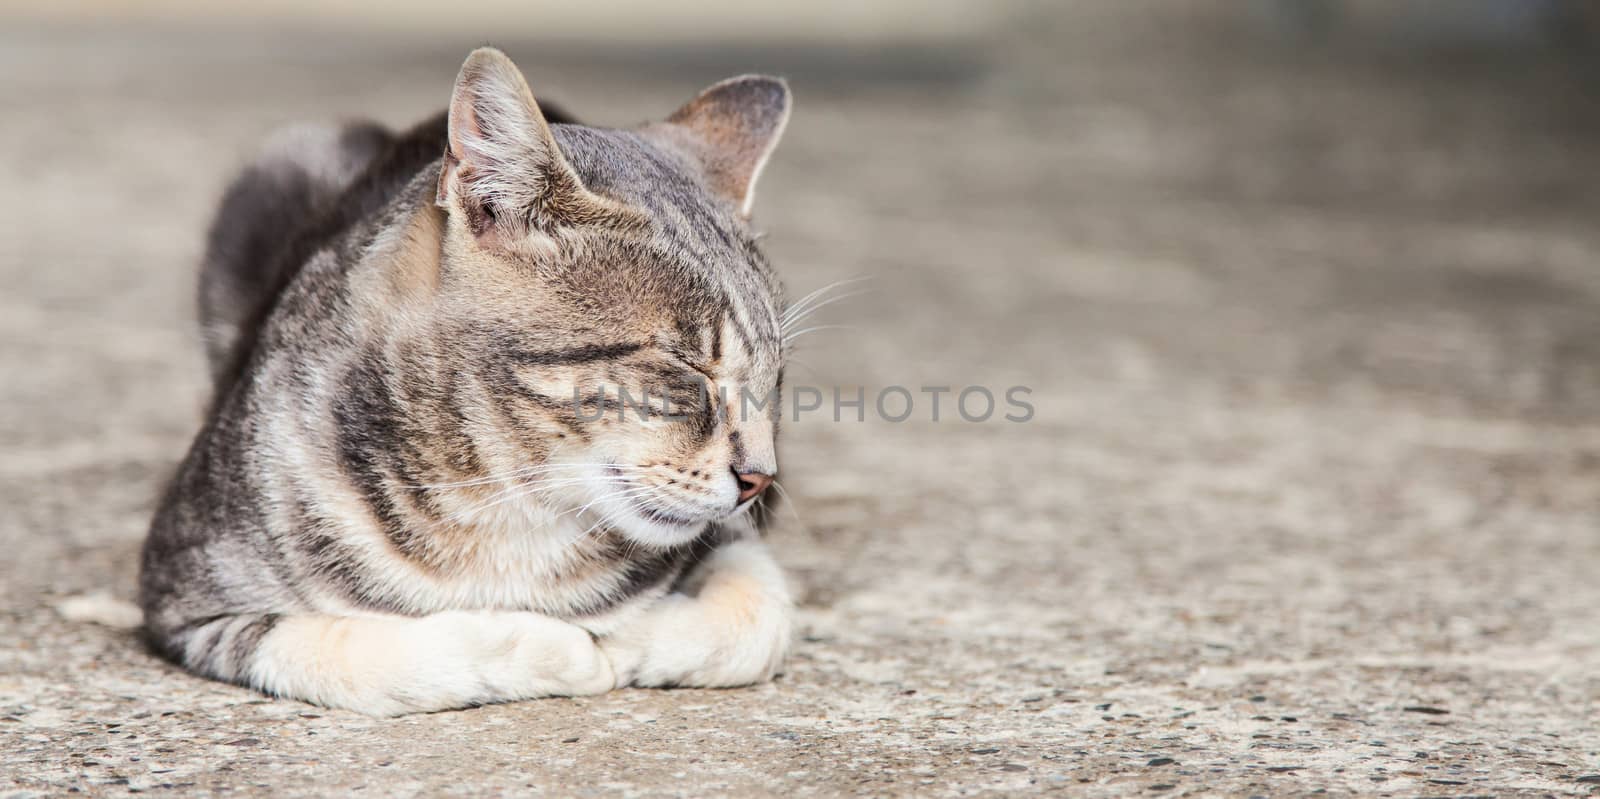 A cute European cat sleeping on stone